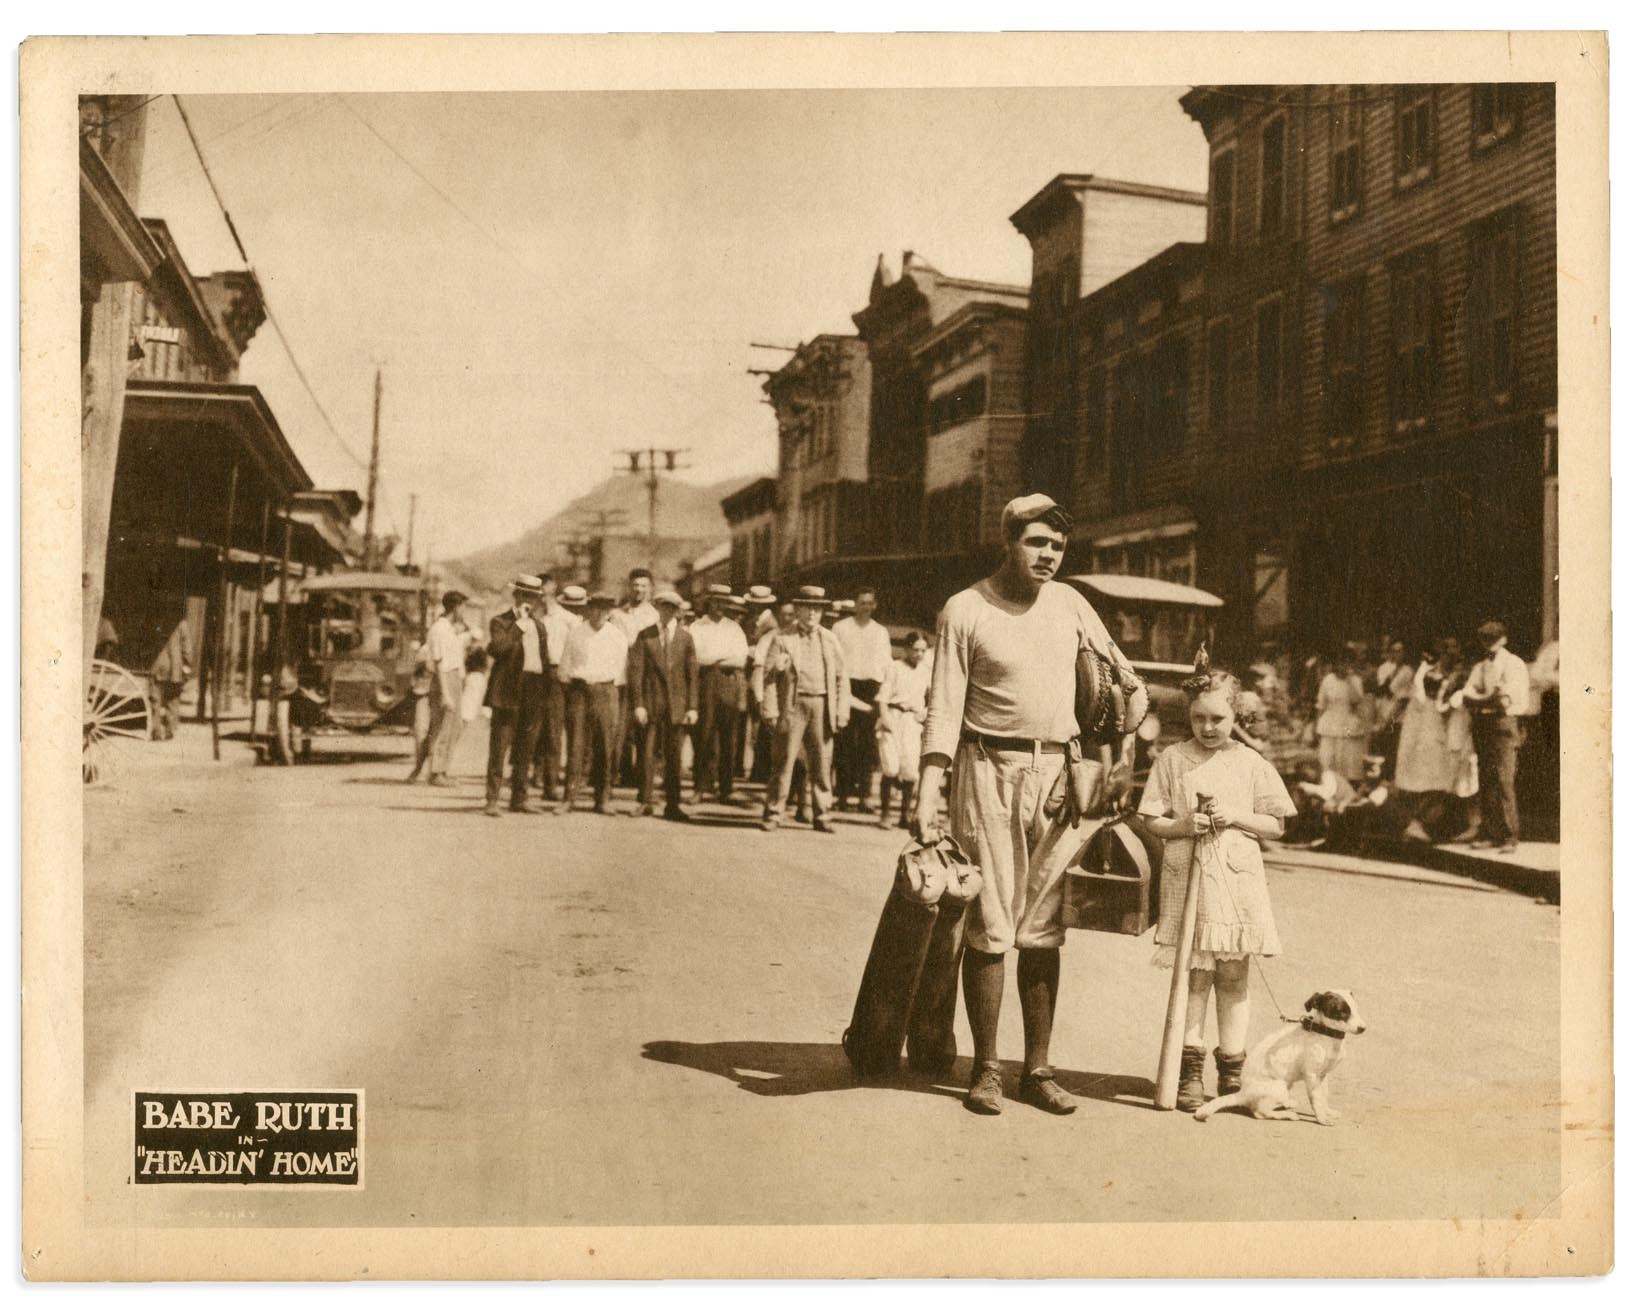 - 1920 Babe Ruth in "Heading Home" Lobby Card